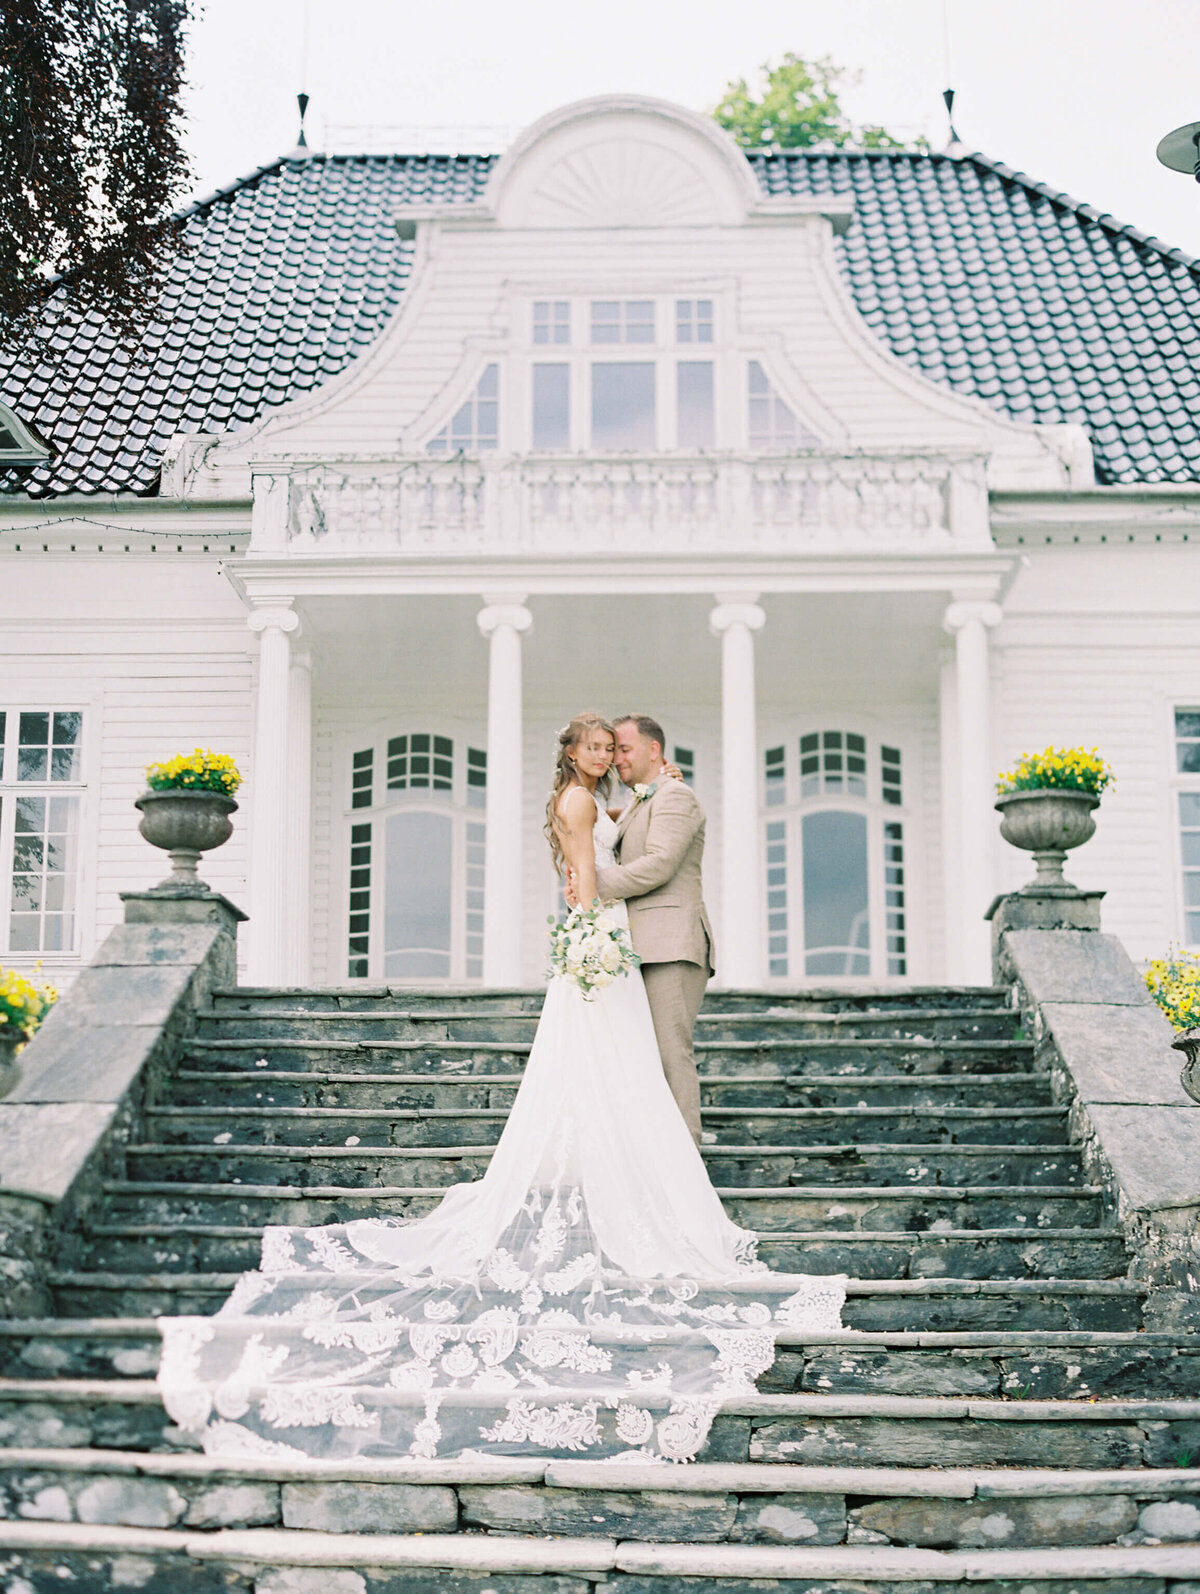 Lisa-Leanne-Photography_Bergen-Norway-Wedding_International-Wedding-Photographer_Destination-Wedding-Photographer_40